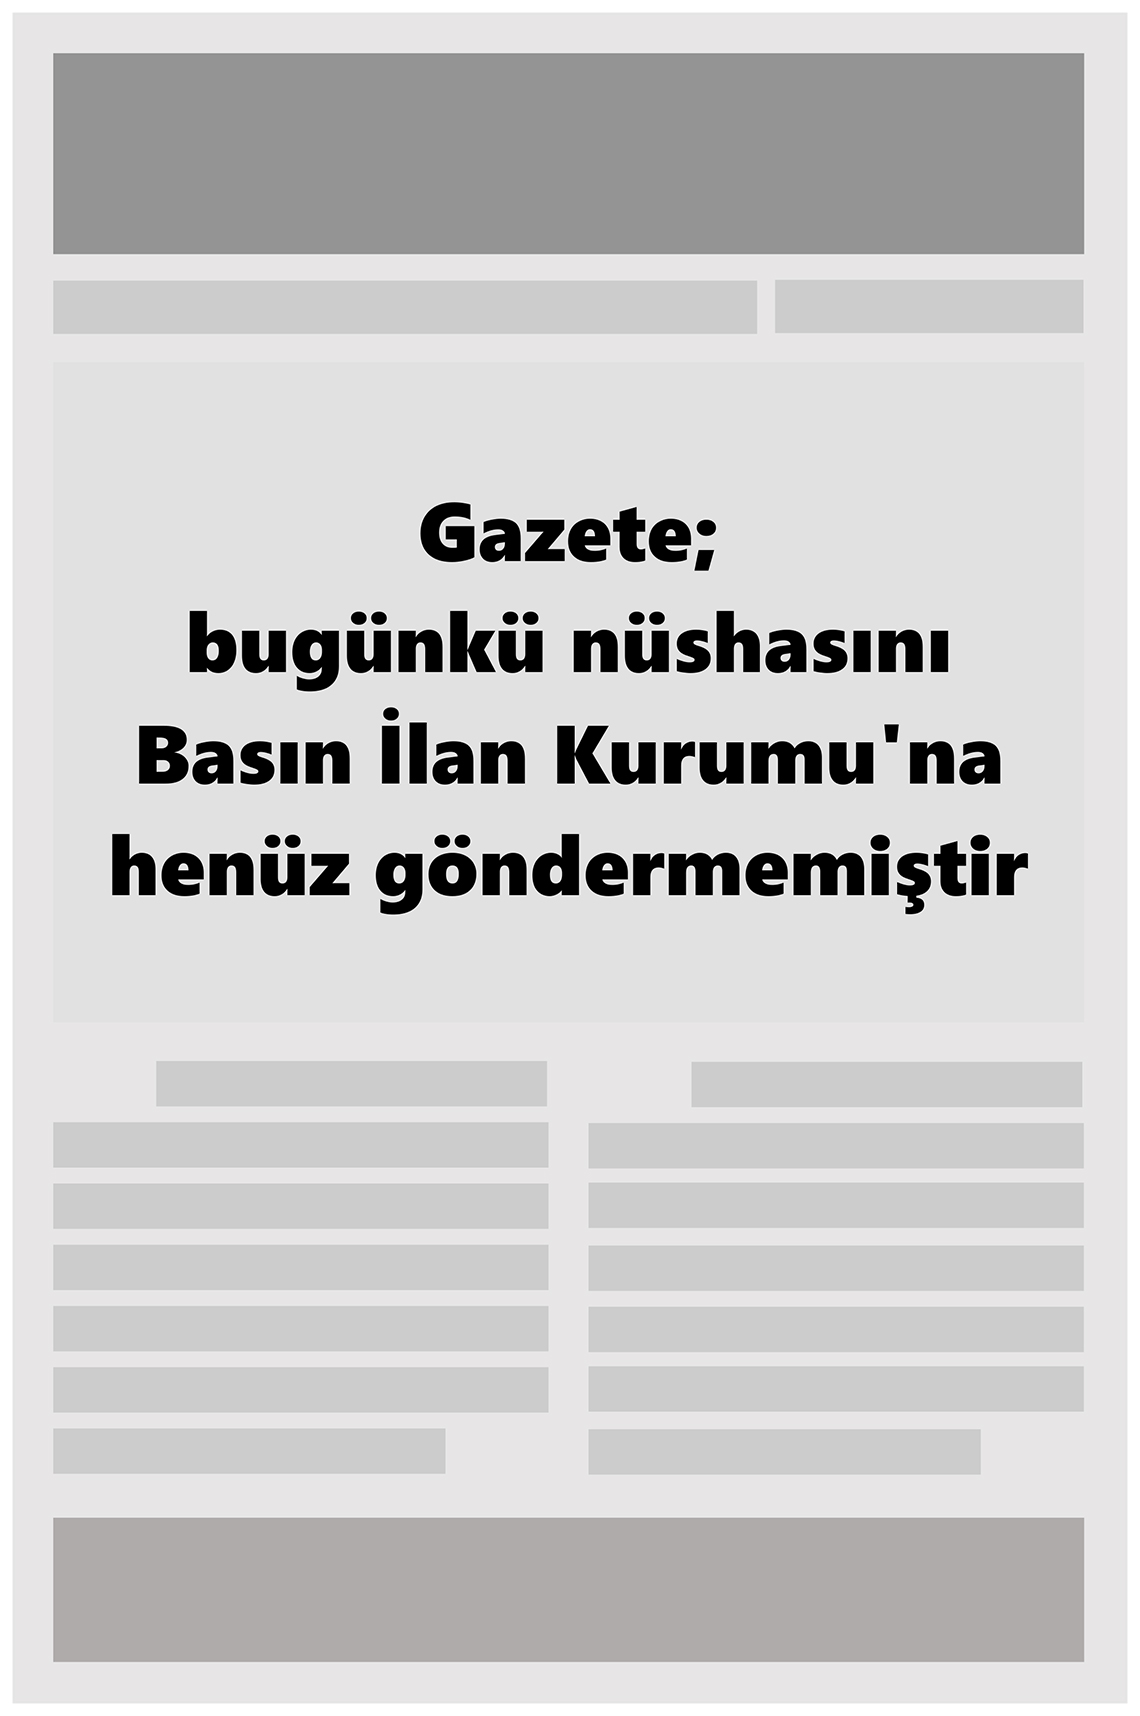 16 Ağustos 2022 Mut'tan Haber Gazete Manşeti